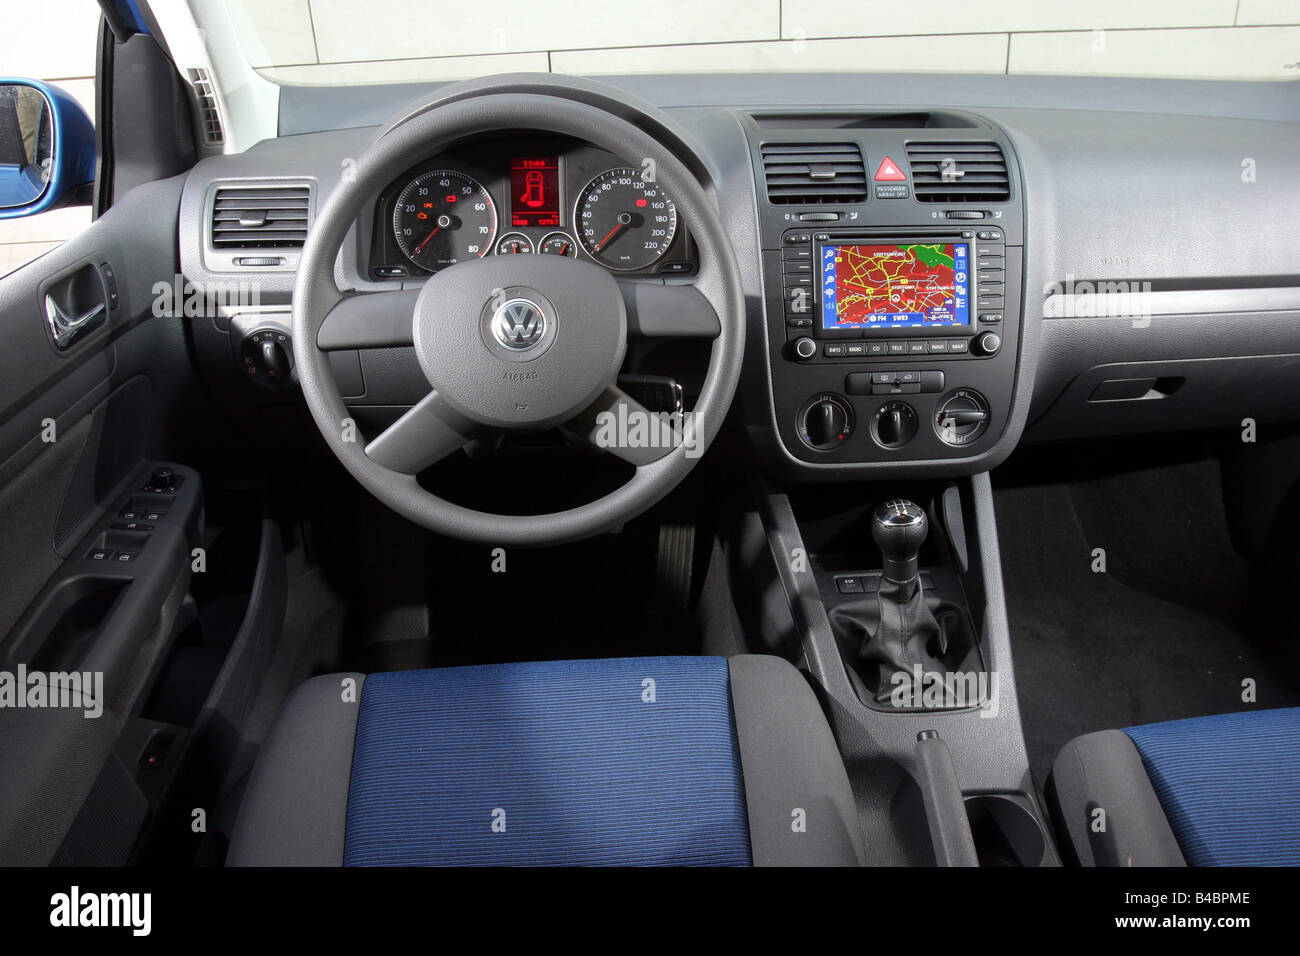 Car Vw Volkswagen Golf V 1 4 Trend Lower Middle Sized